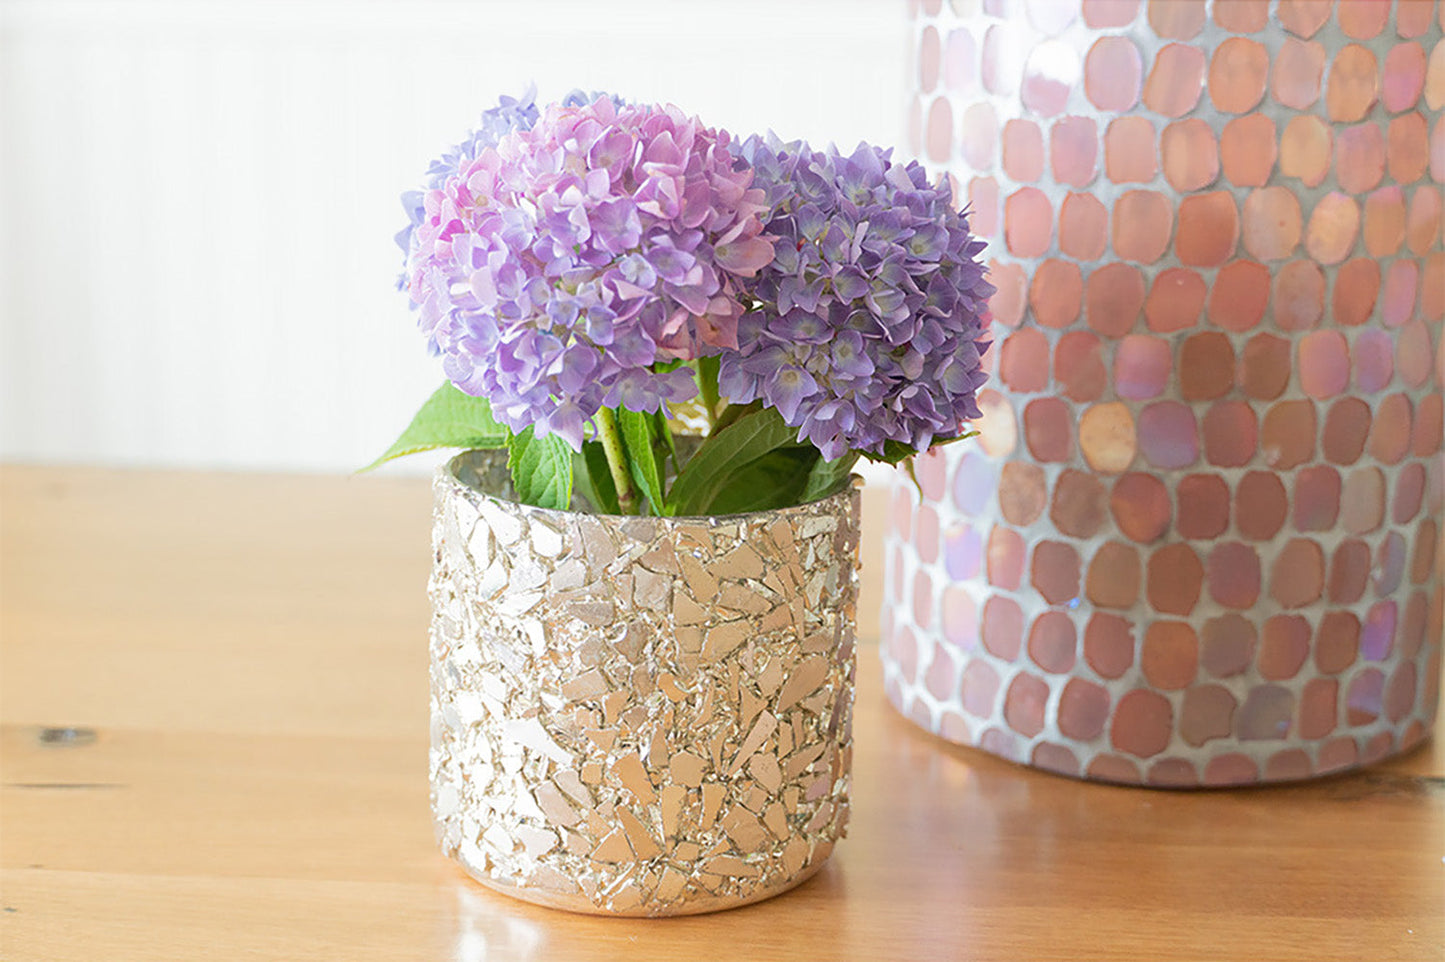 Silver Crushed Mosaic Votive + Vase by Anaya